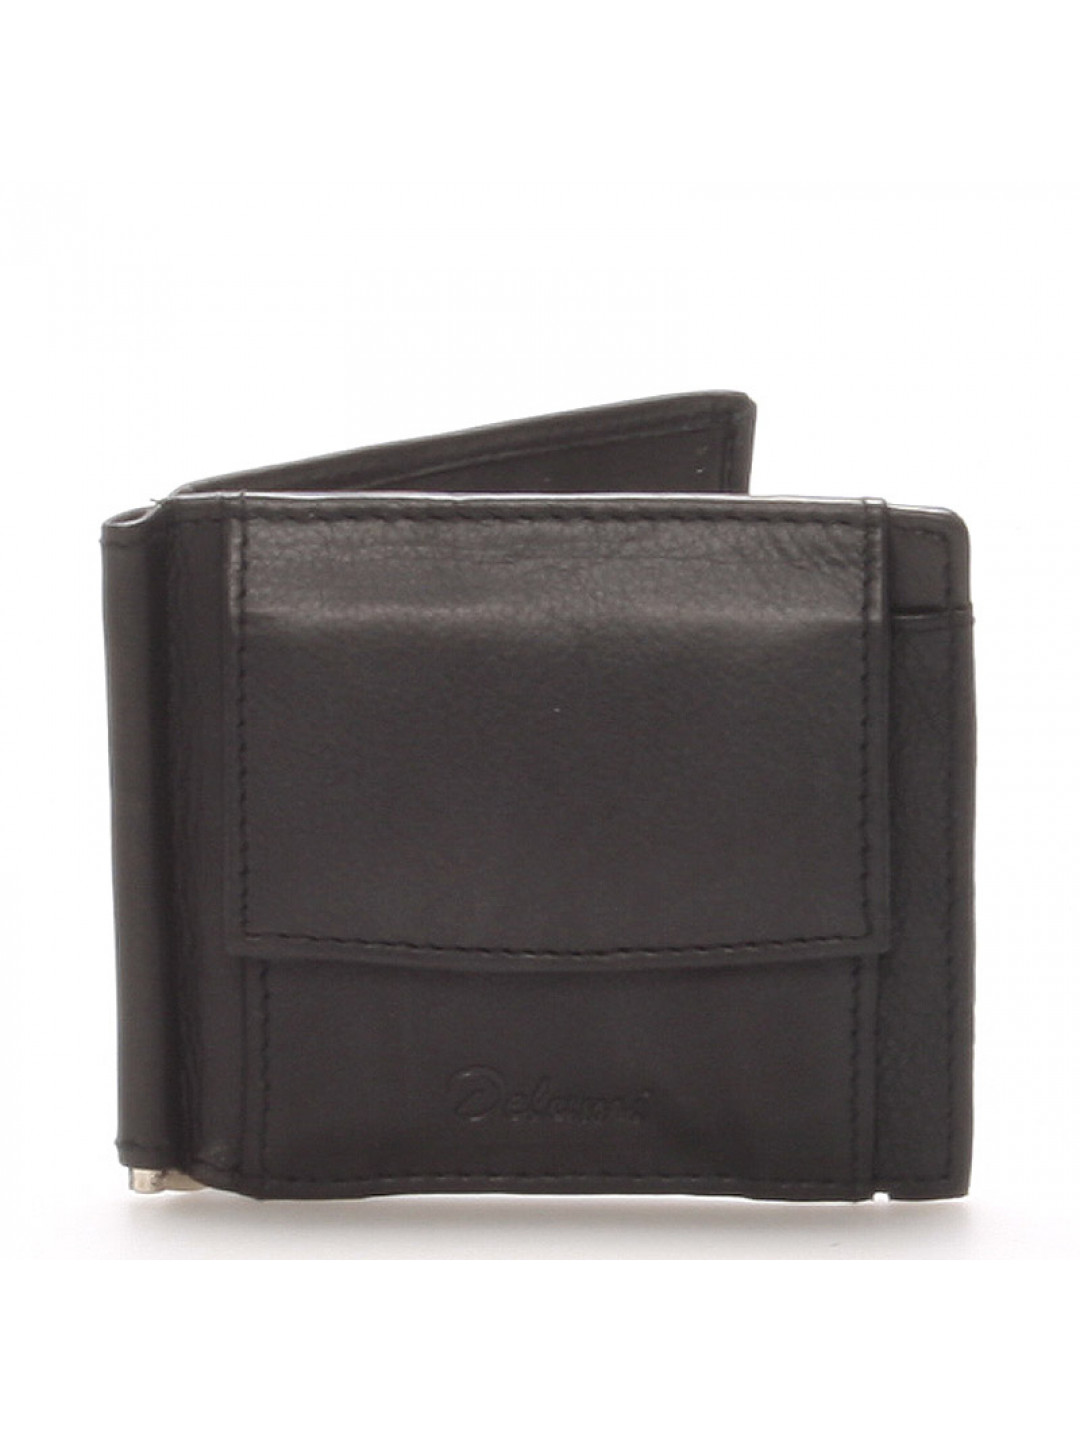 Malá kožená černá peněženka – Delami 8697